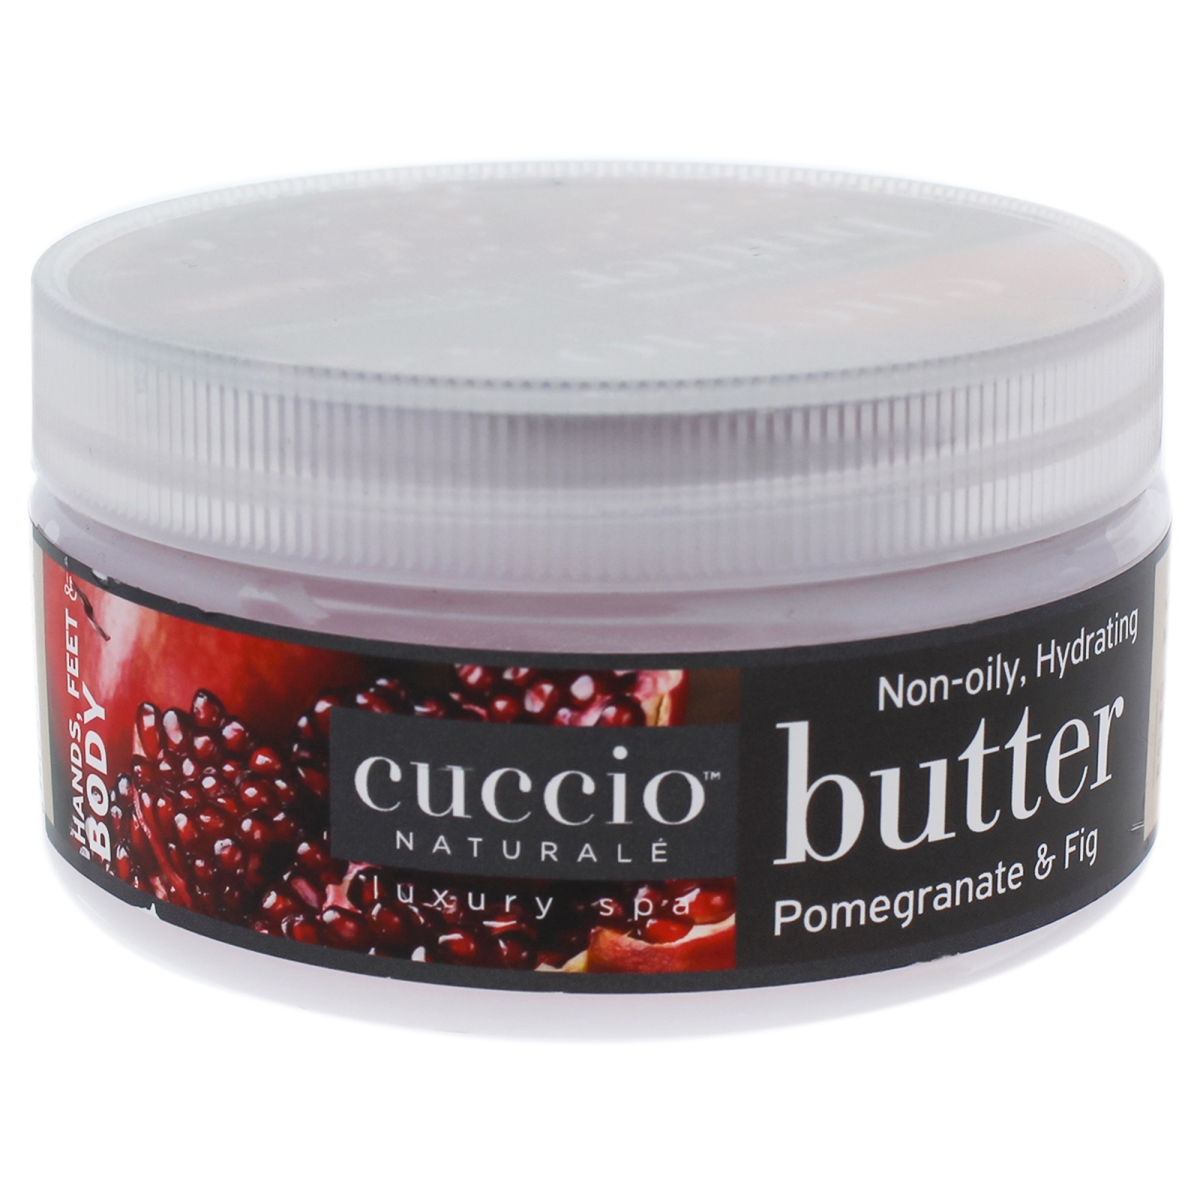 I0090879 Butter Blend Body Lotion For Unisex - Pomegranate & Fig - 8 Oz